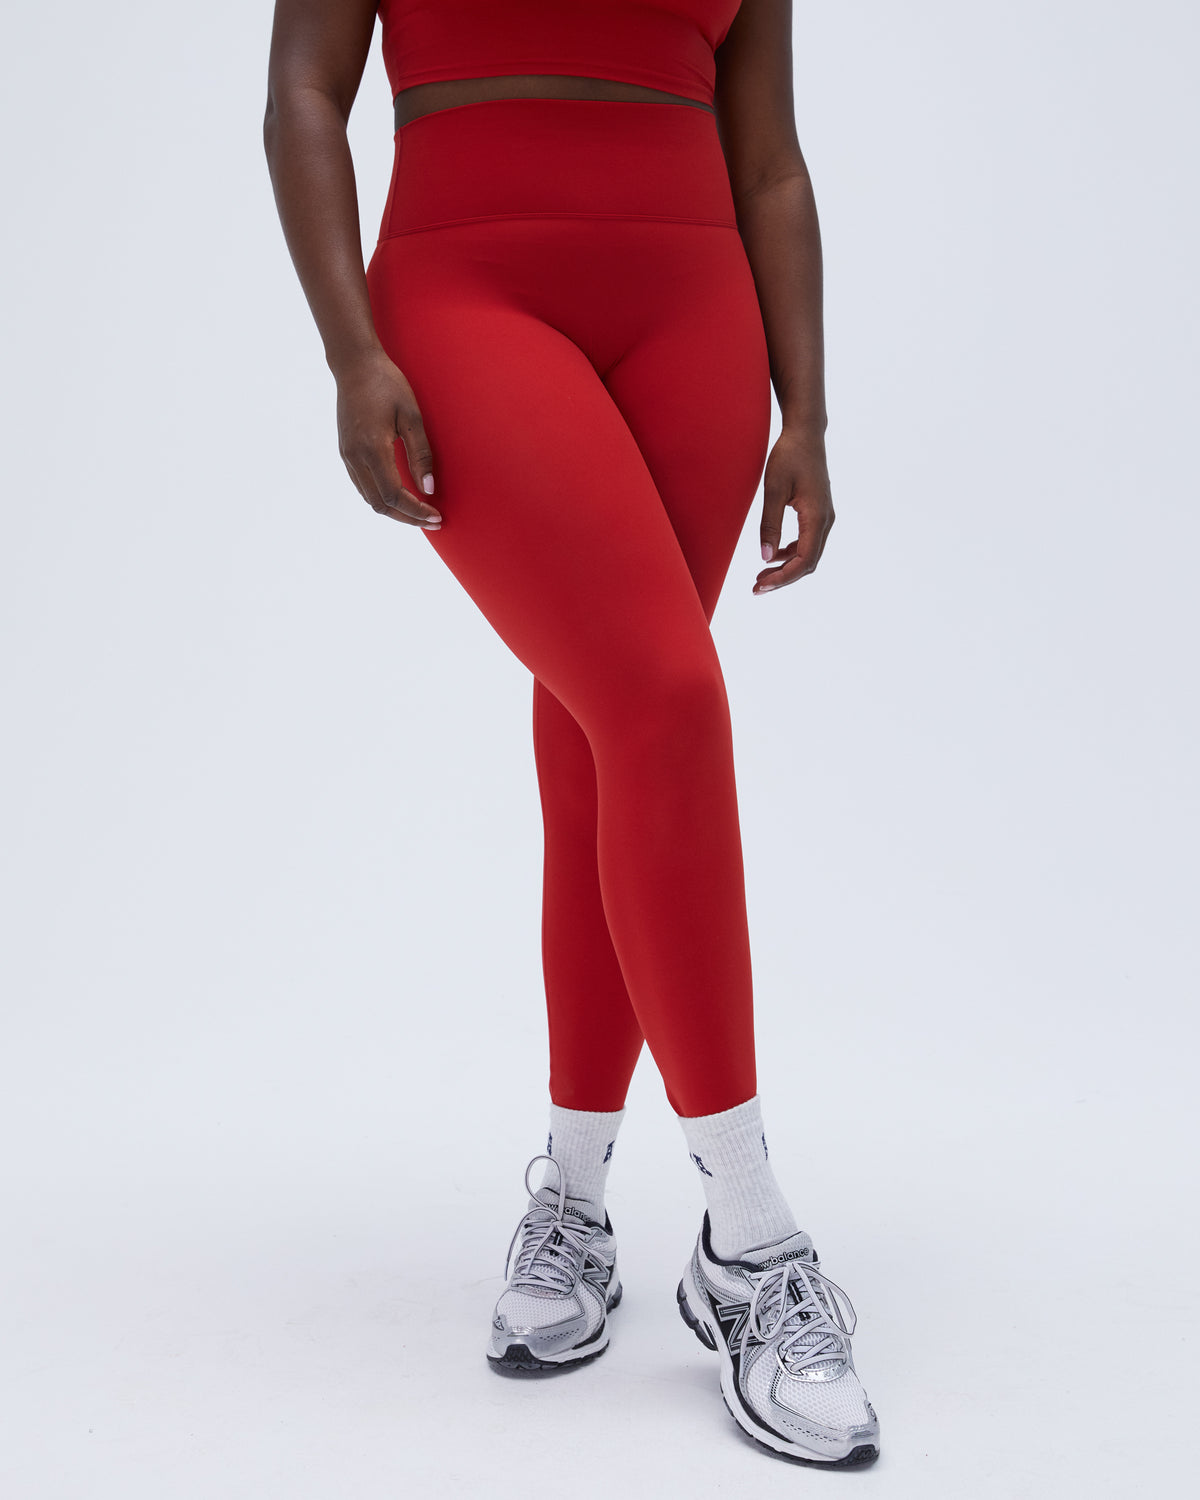 NEW AVIA Women’s XL Red Flame Capri Leggings Athleisure Gym Running Mesh  Accents